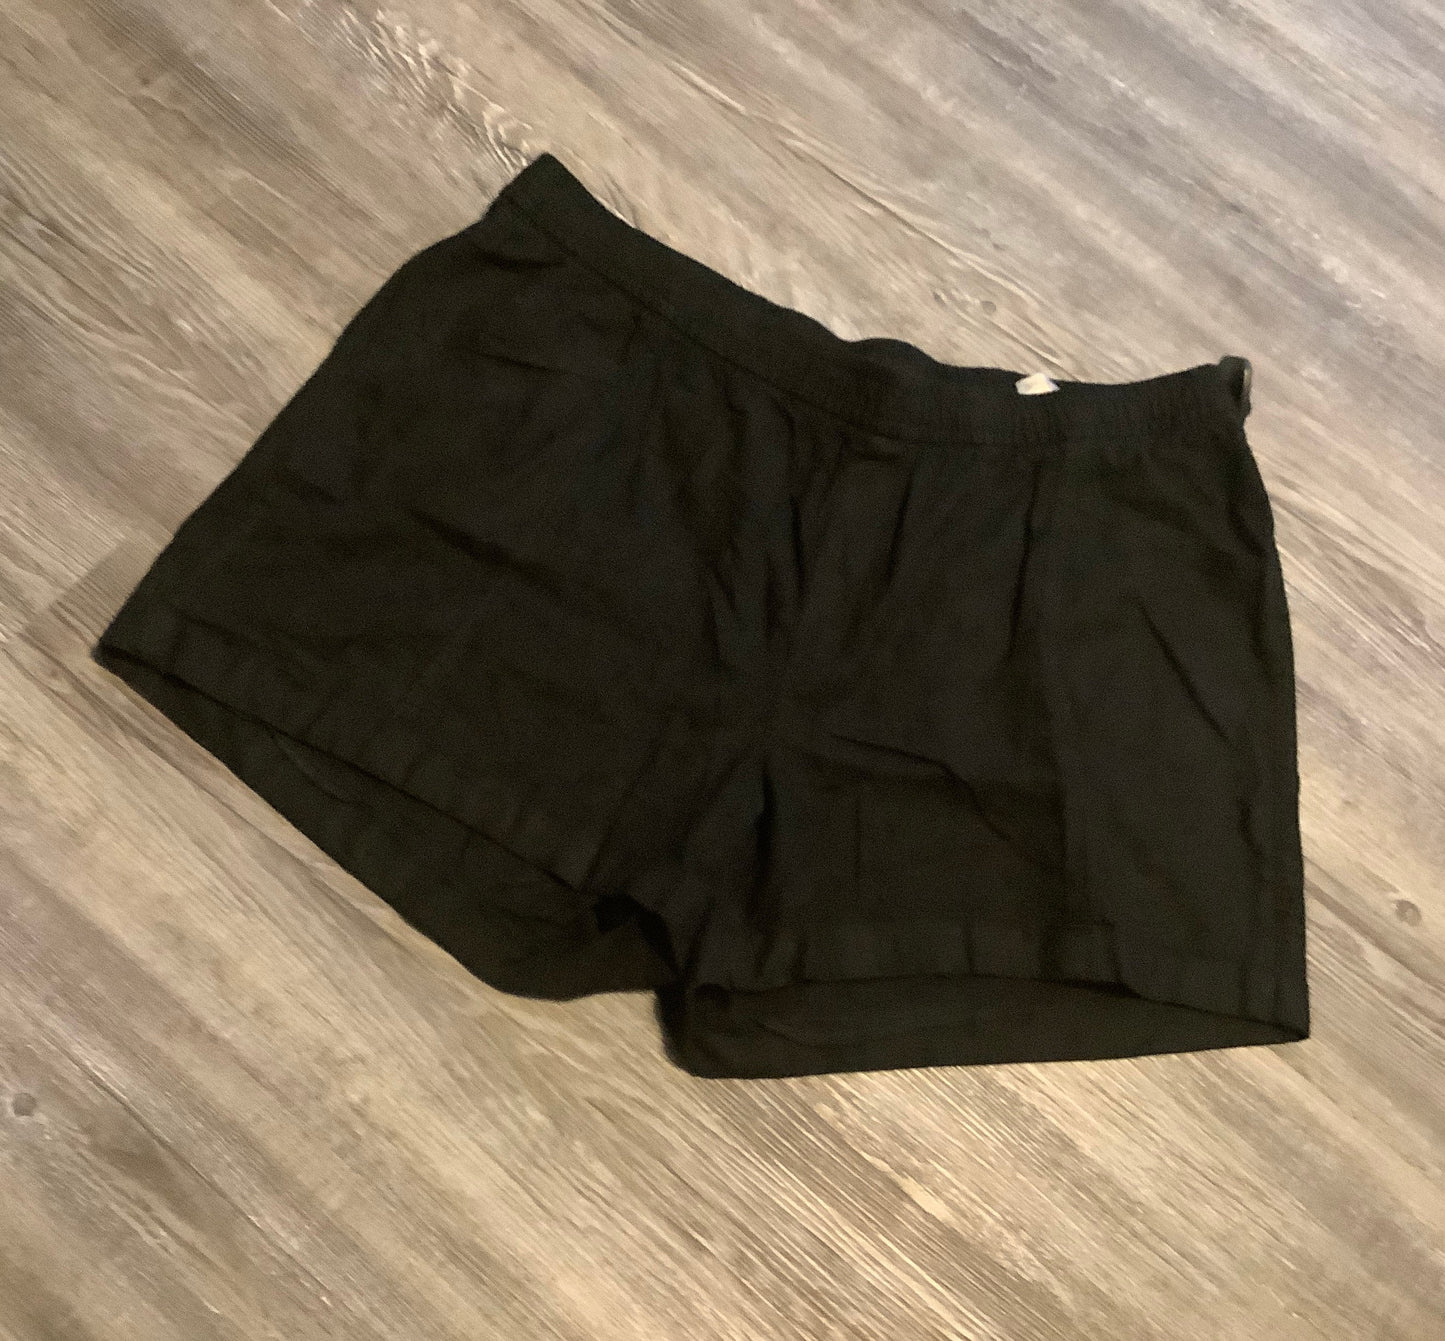 Black Shorts Old Navy, Size Xl